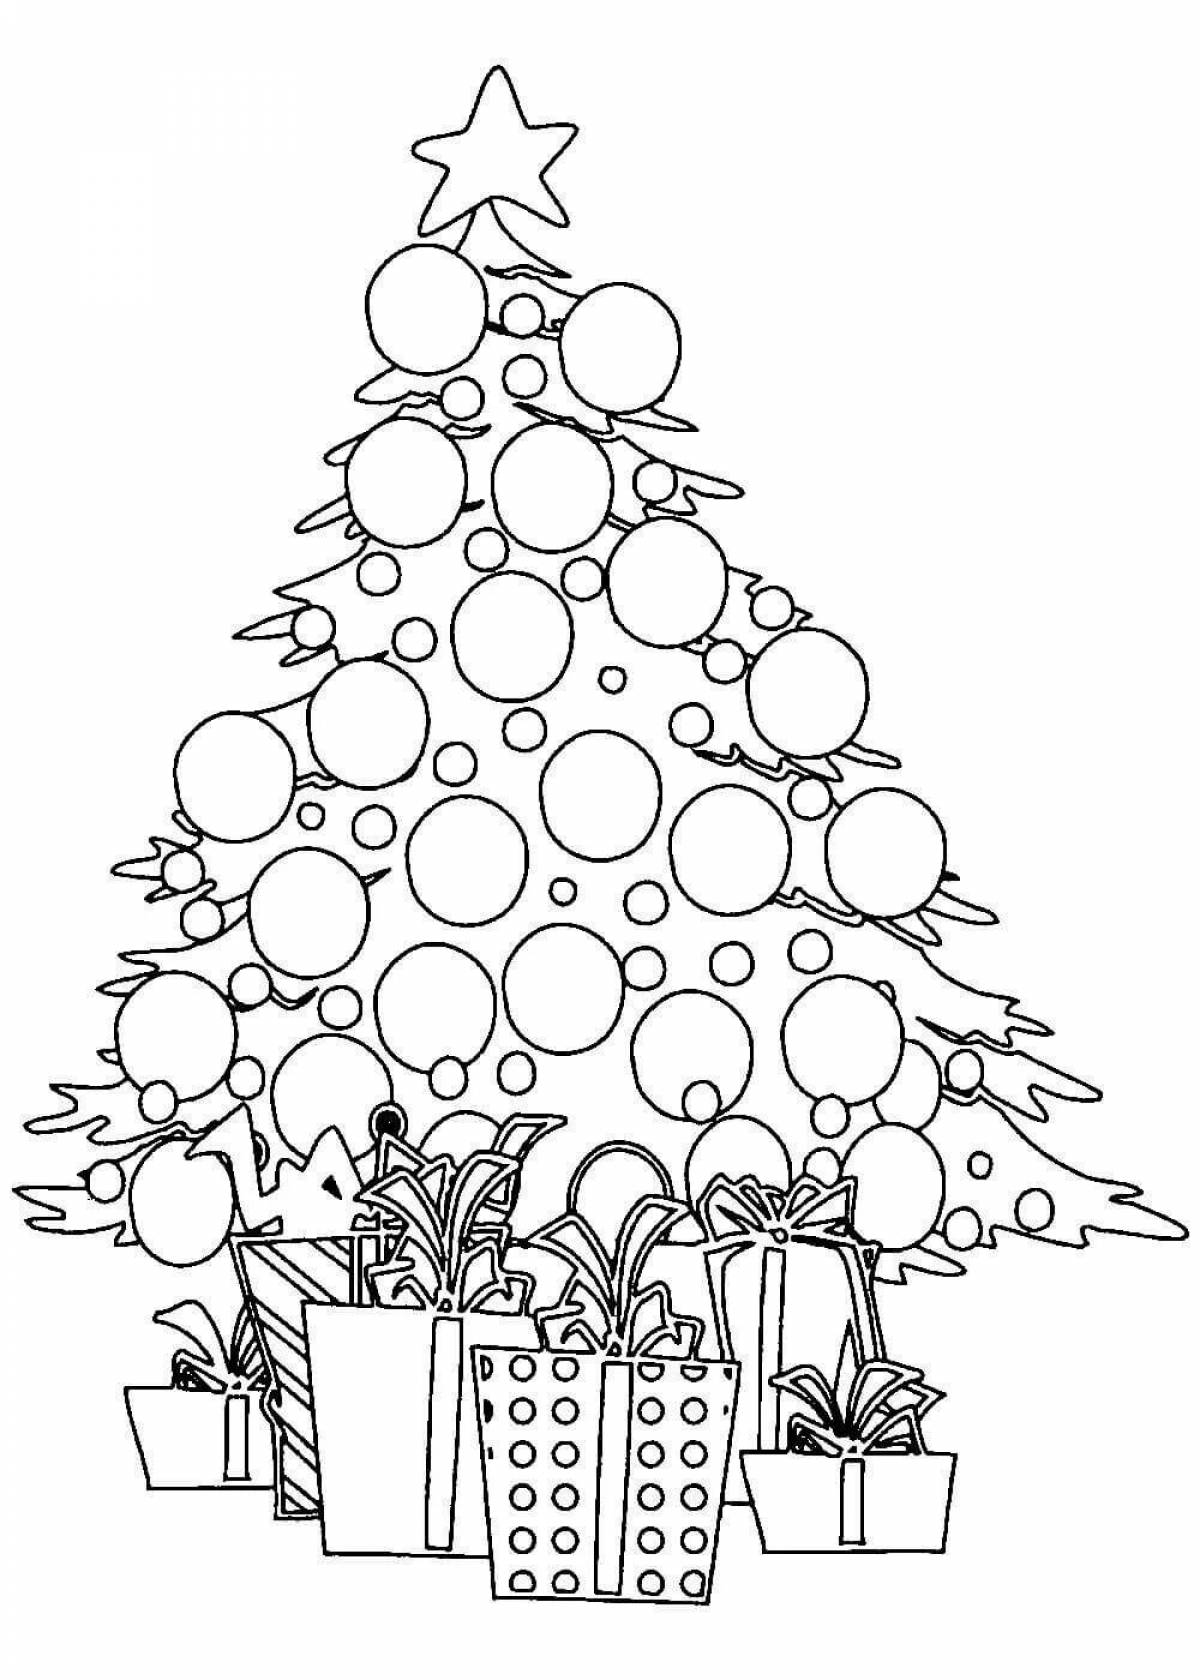 Peaceful Christmas tree with balls